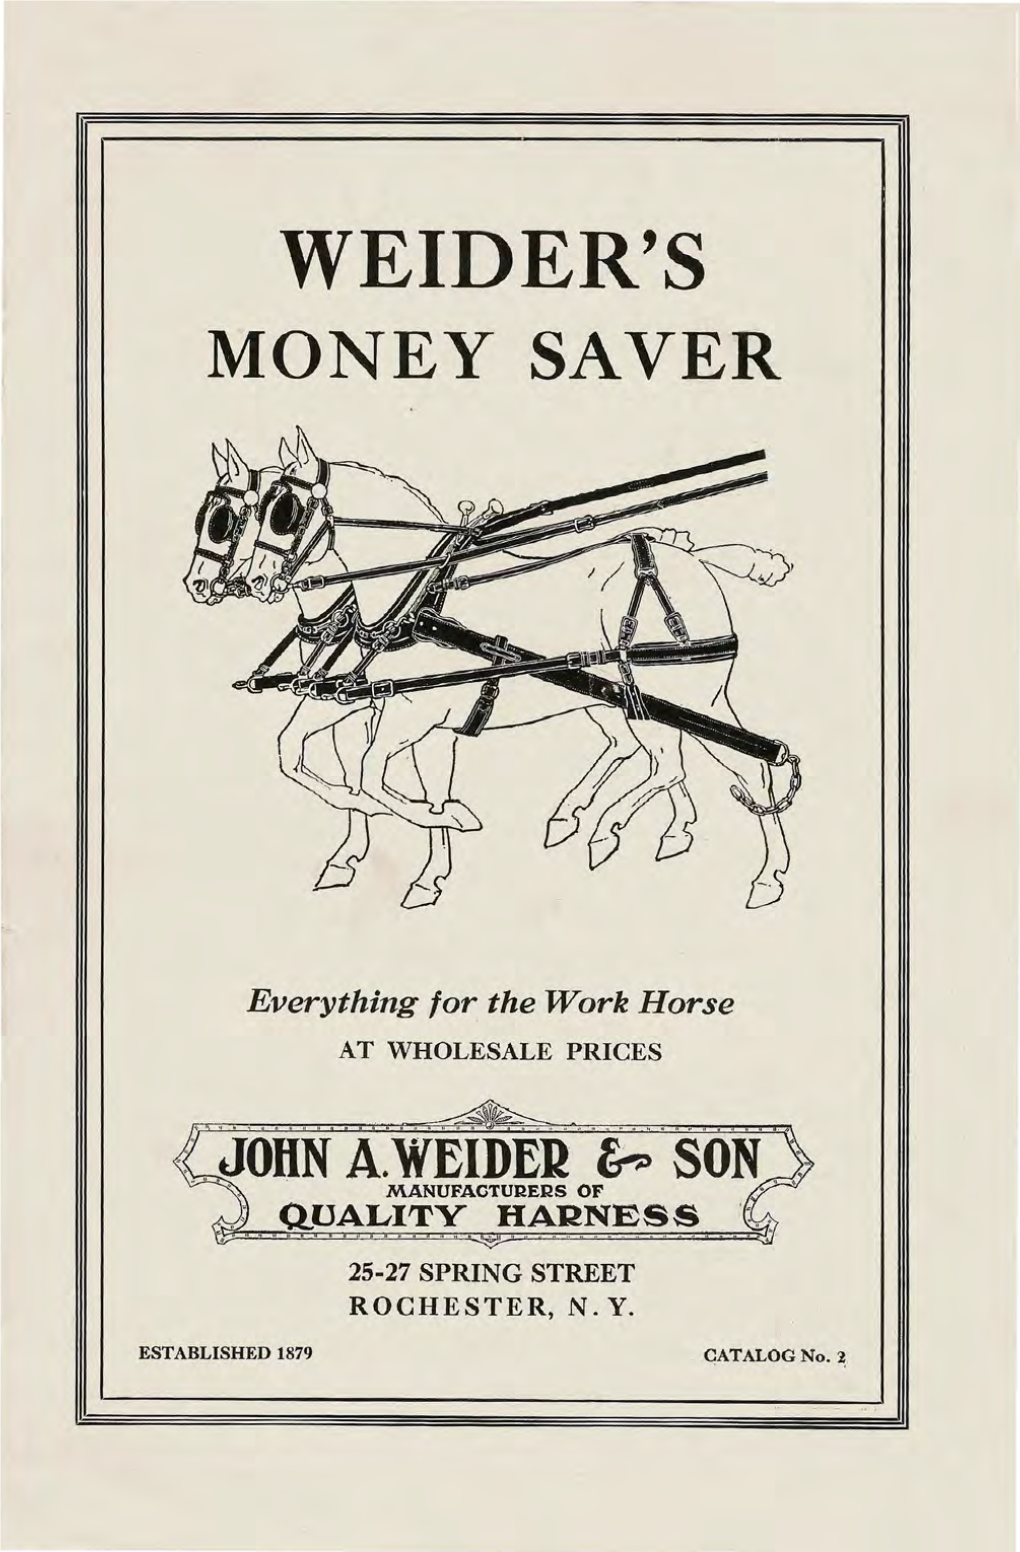 Weider's Money Saver, Rochester, NY